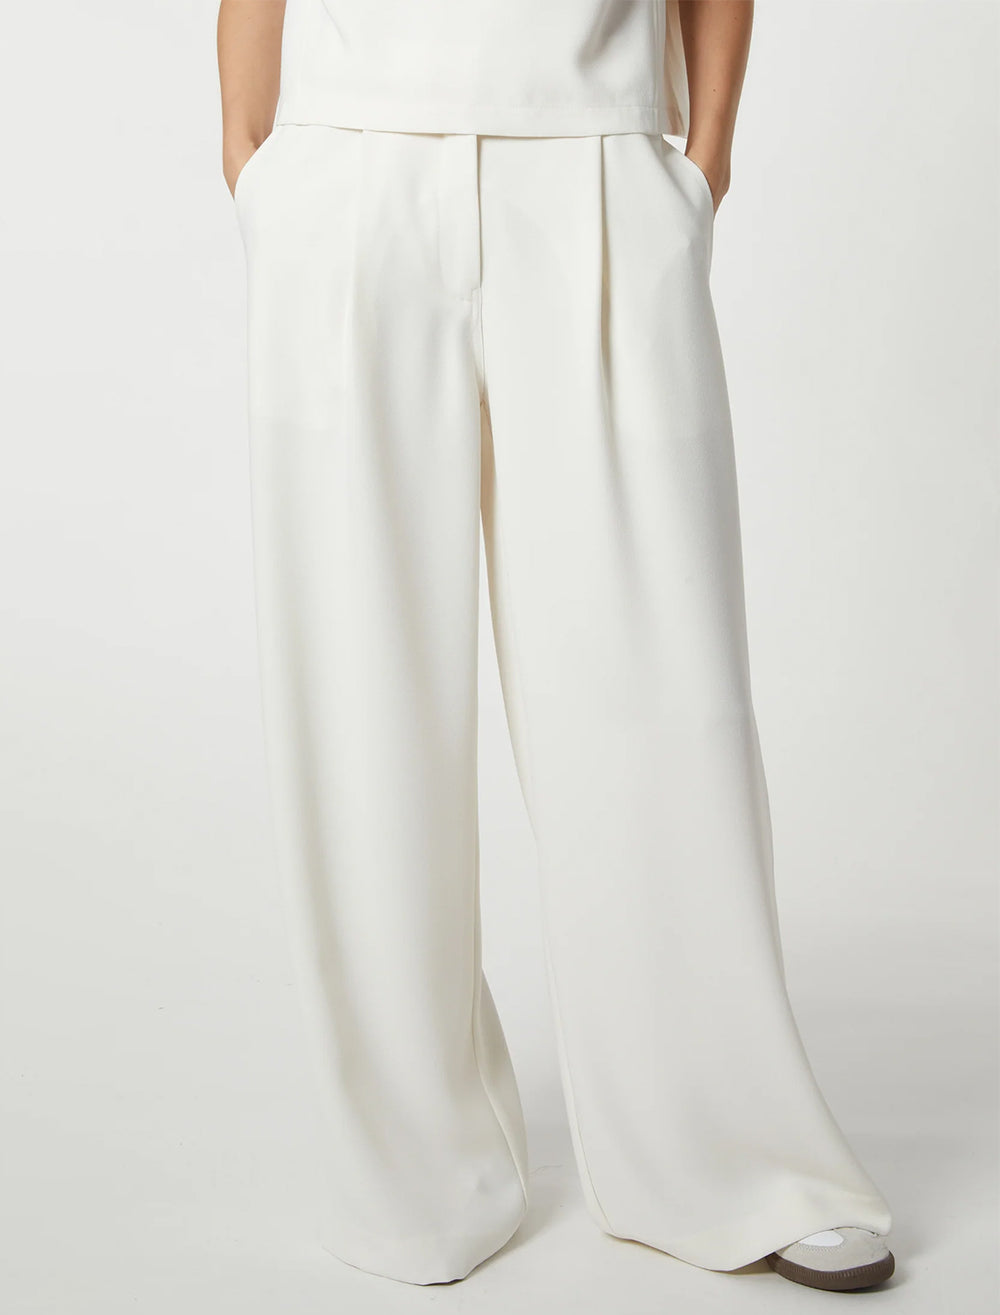 Model wearing Saint Art's neve mid waisted wideleg trouser in ivory crepe.